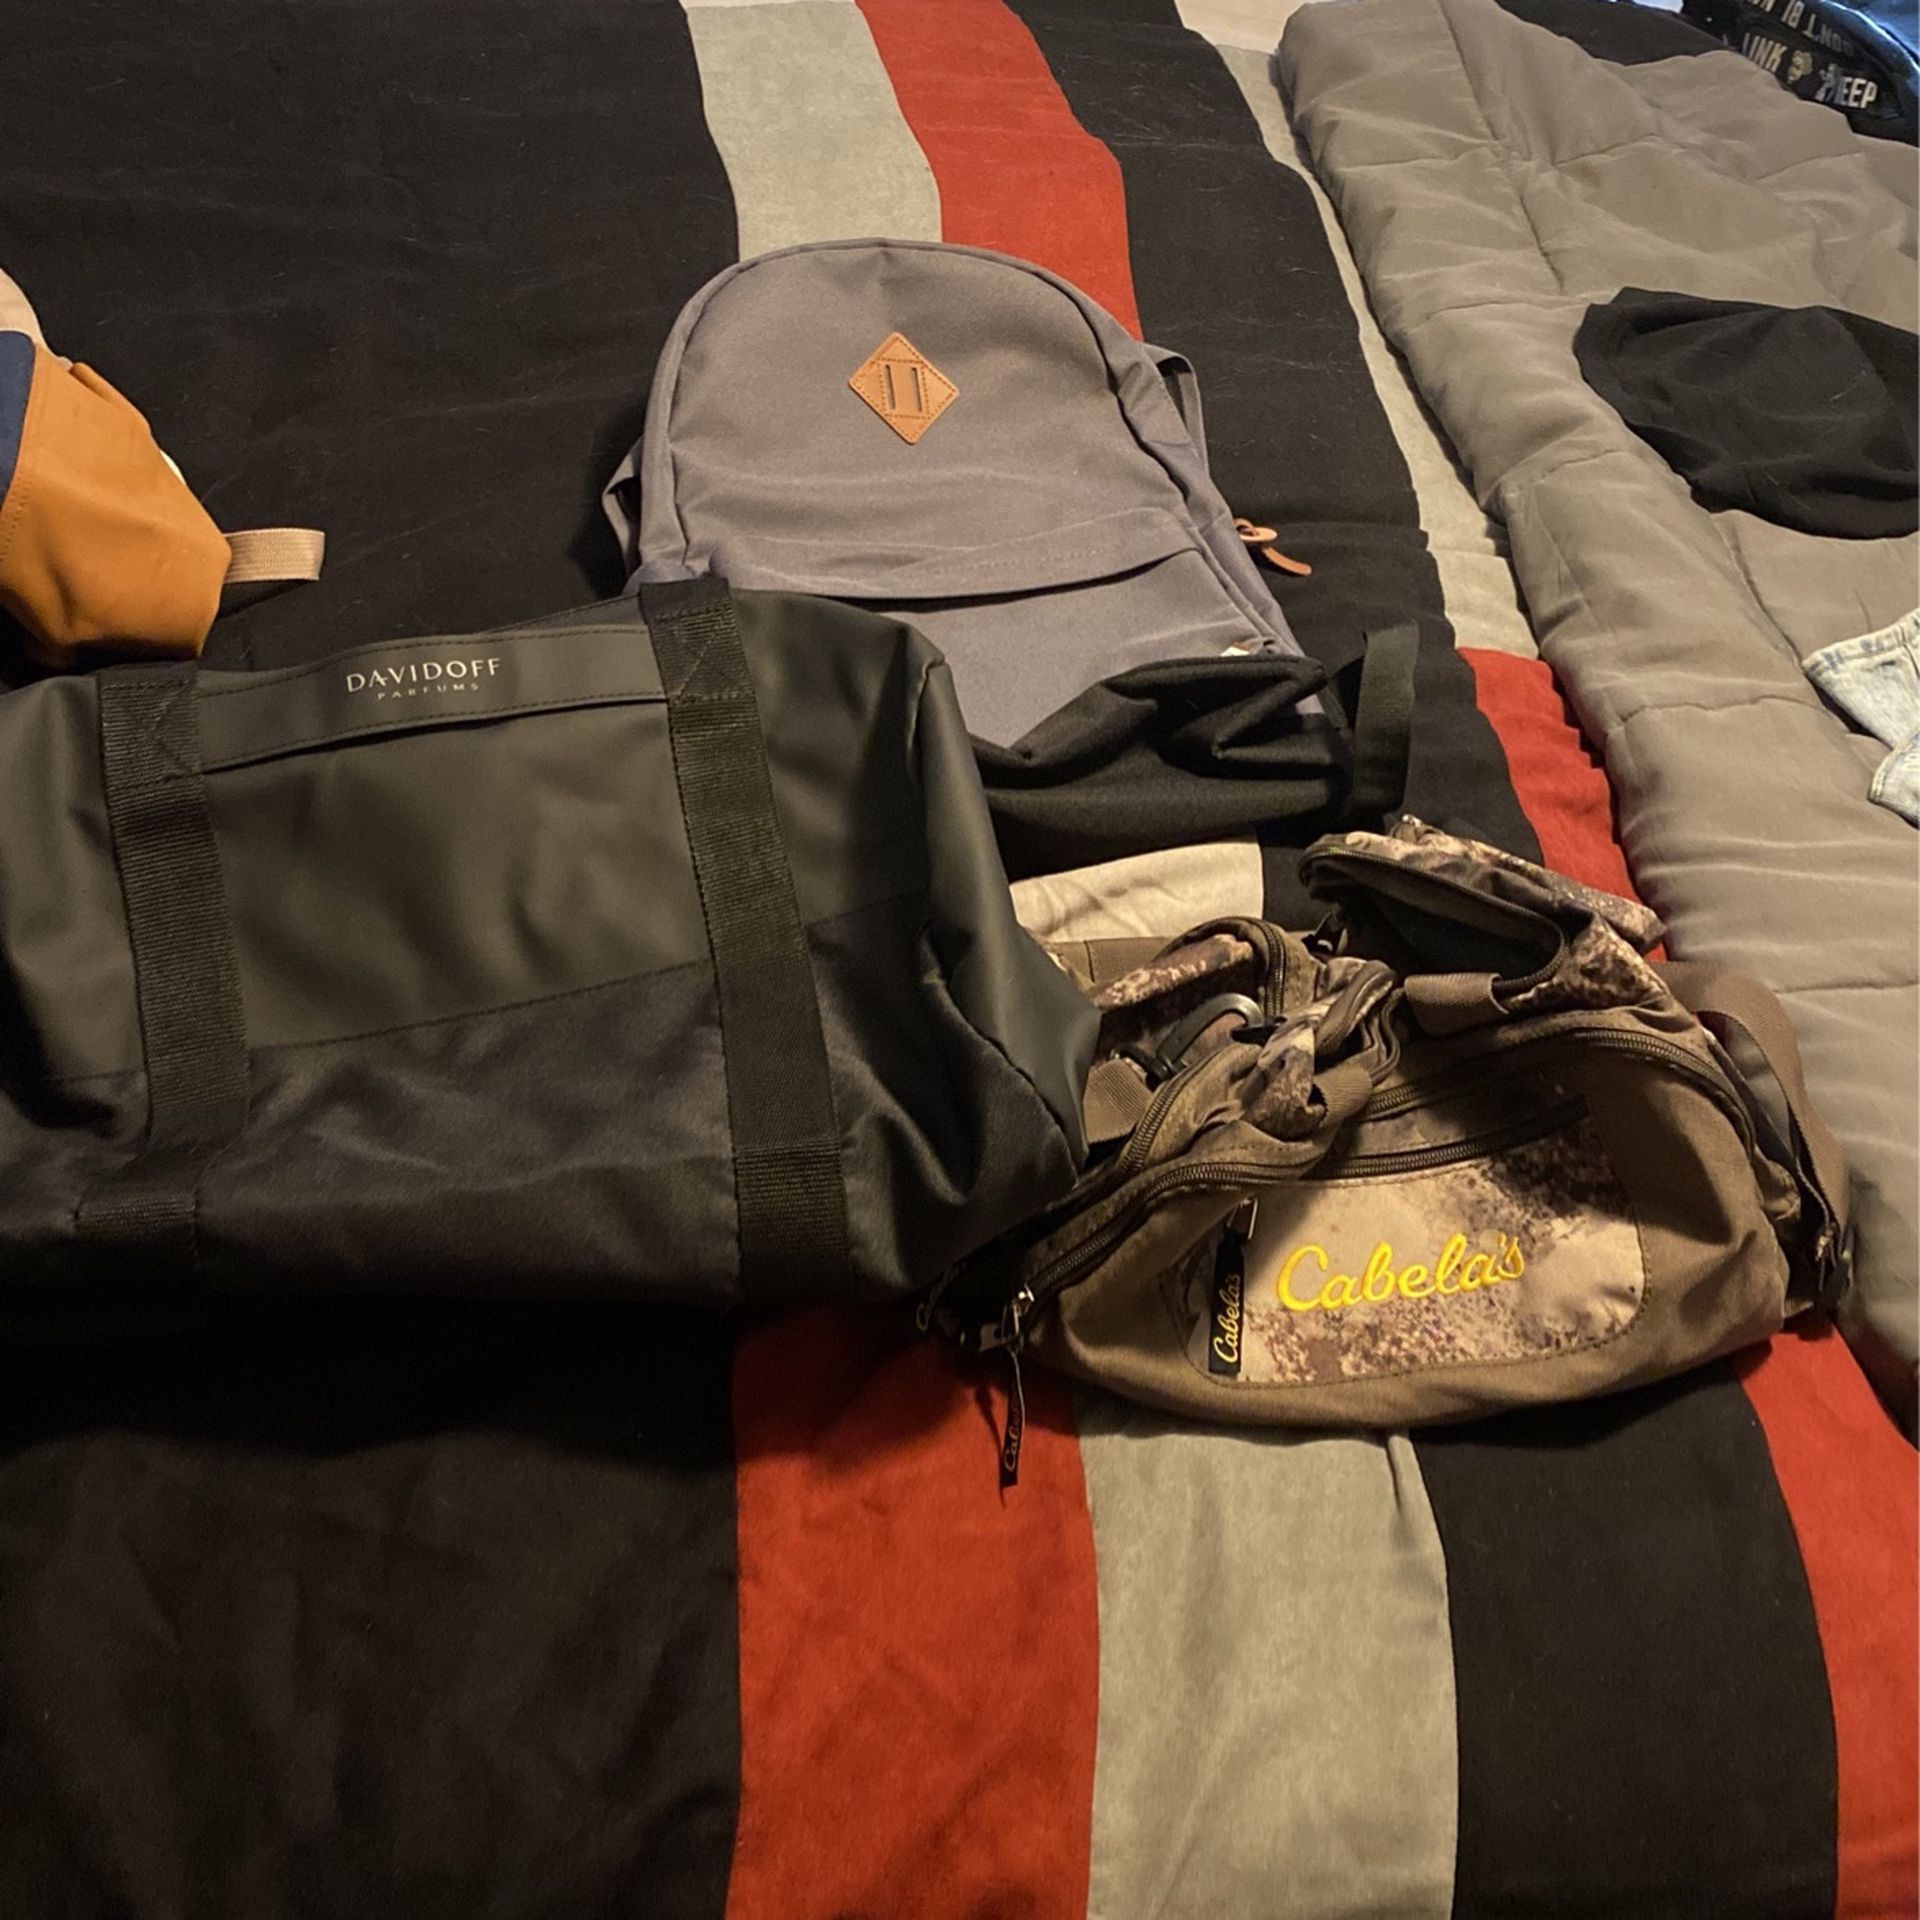 Duffle Bags/backpack